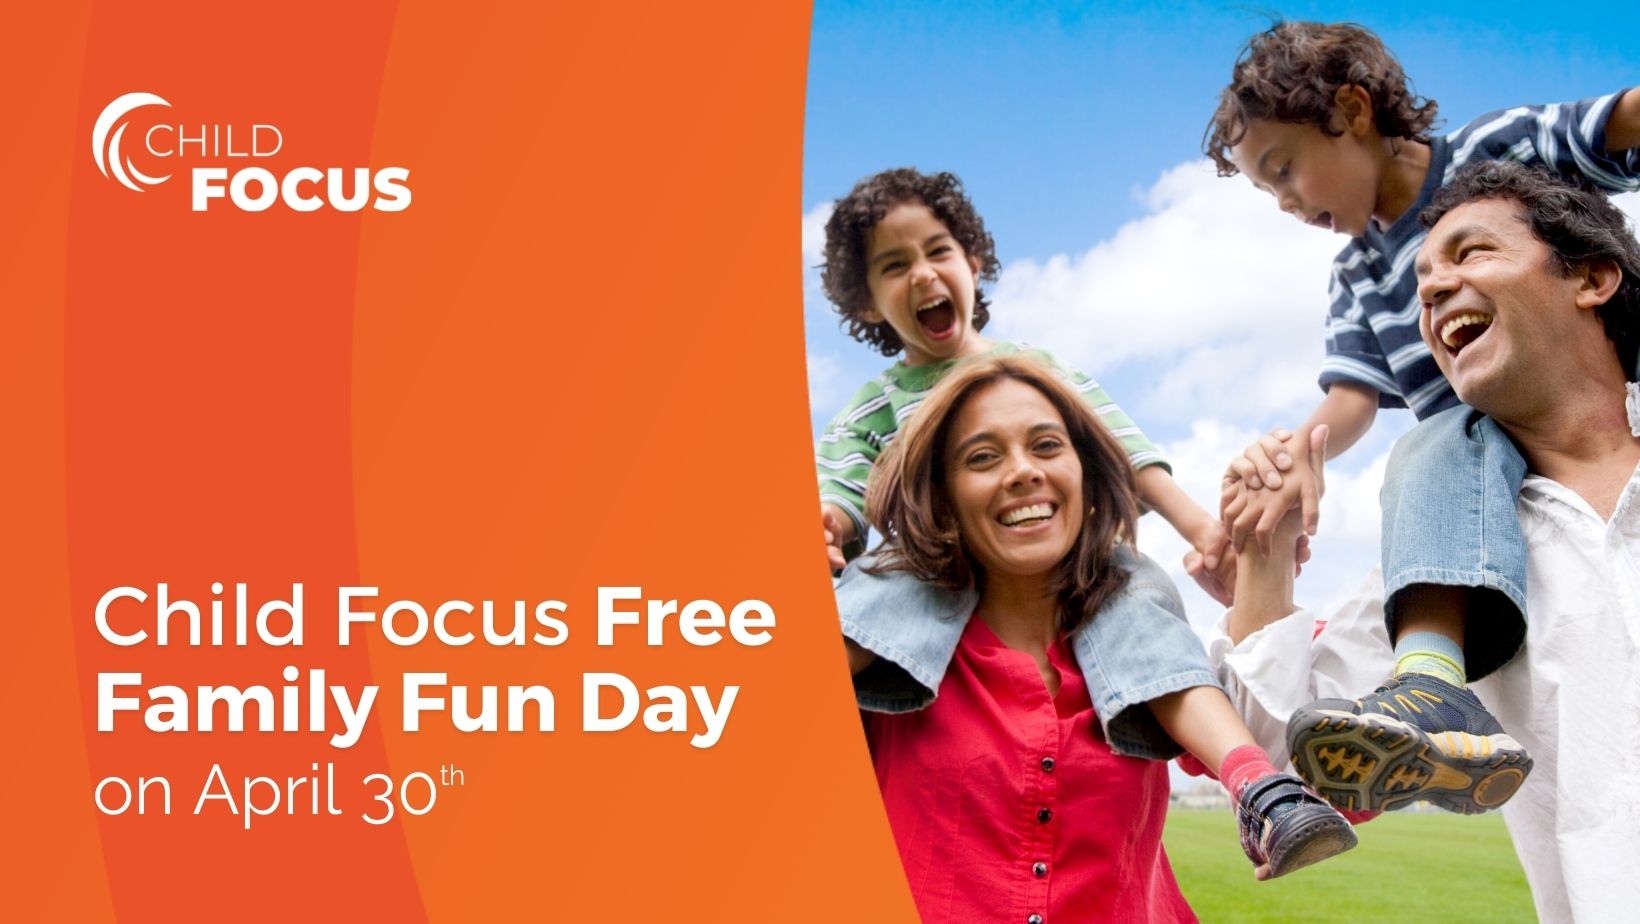 Child Focus Free Family Fun Day on April 30 